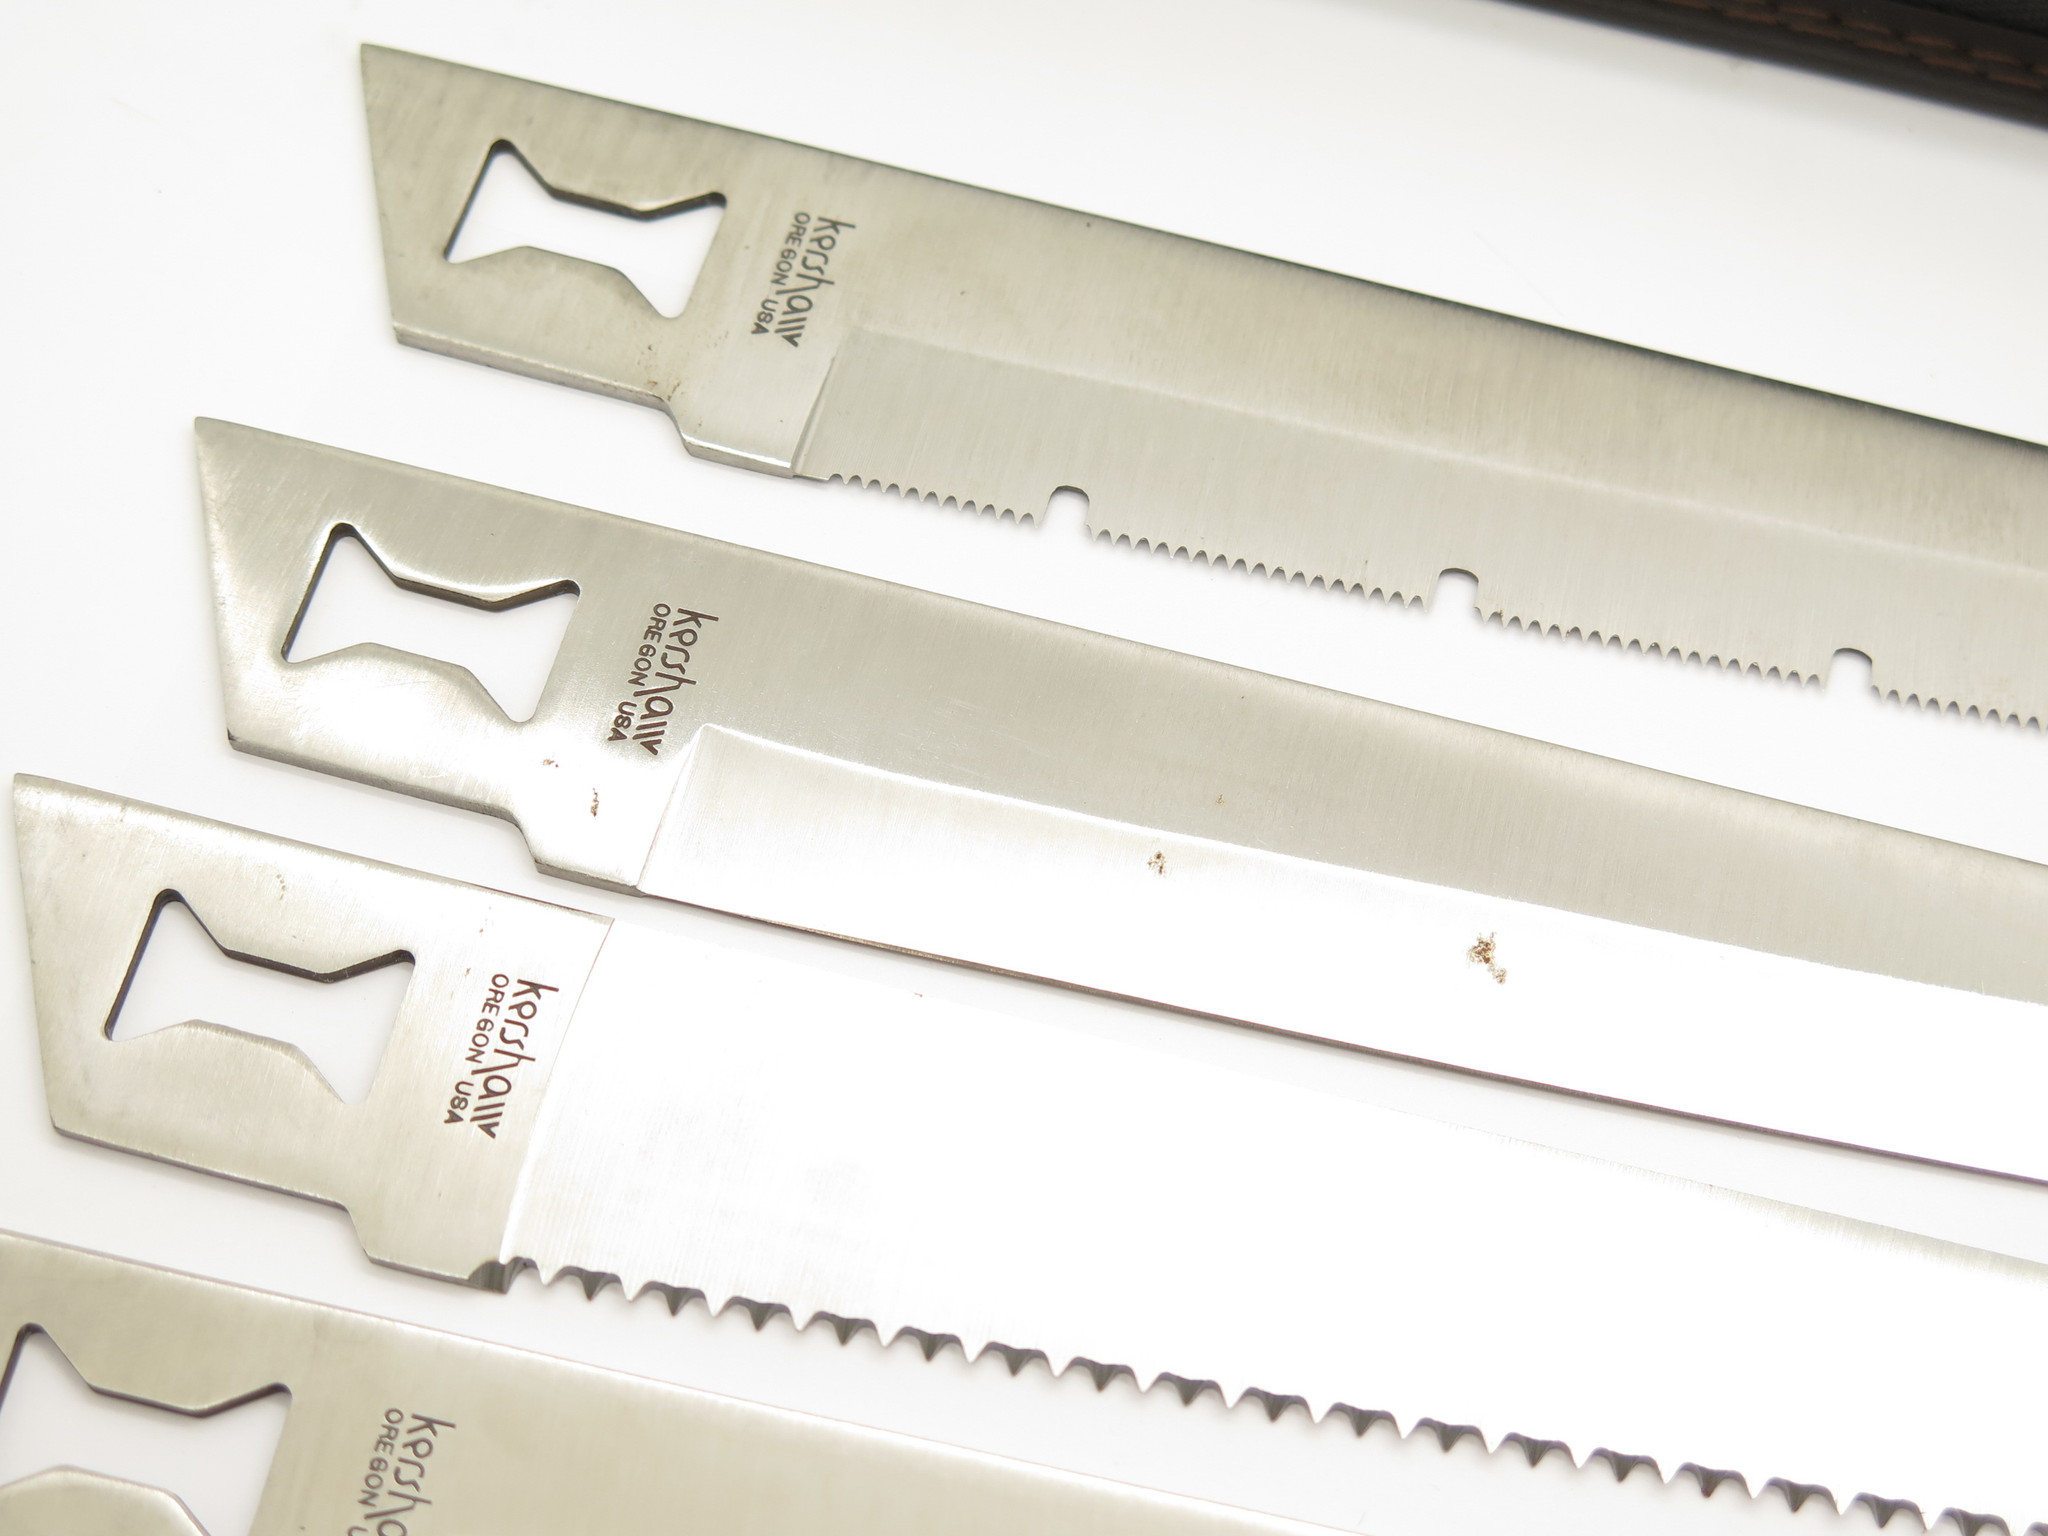 Kershaw Blade Trader's #1099TF – Six Knife Set